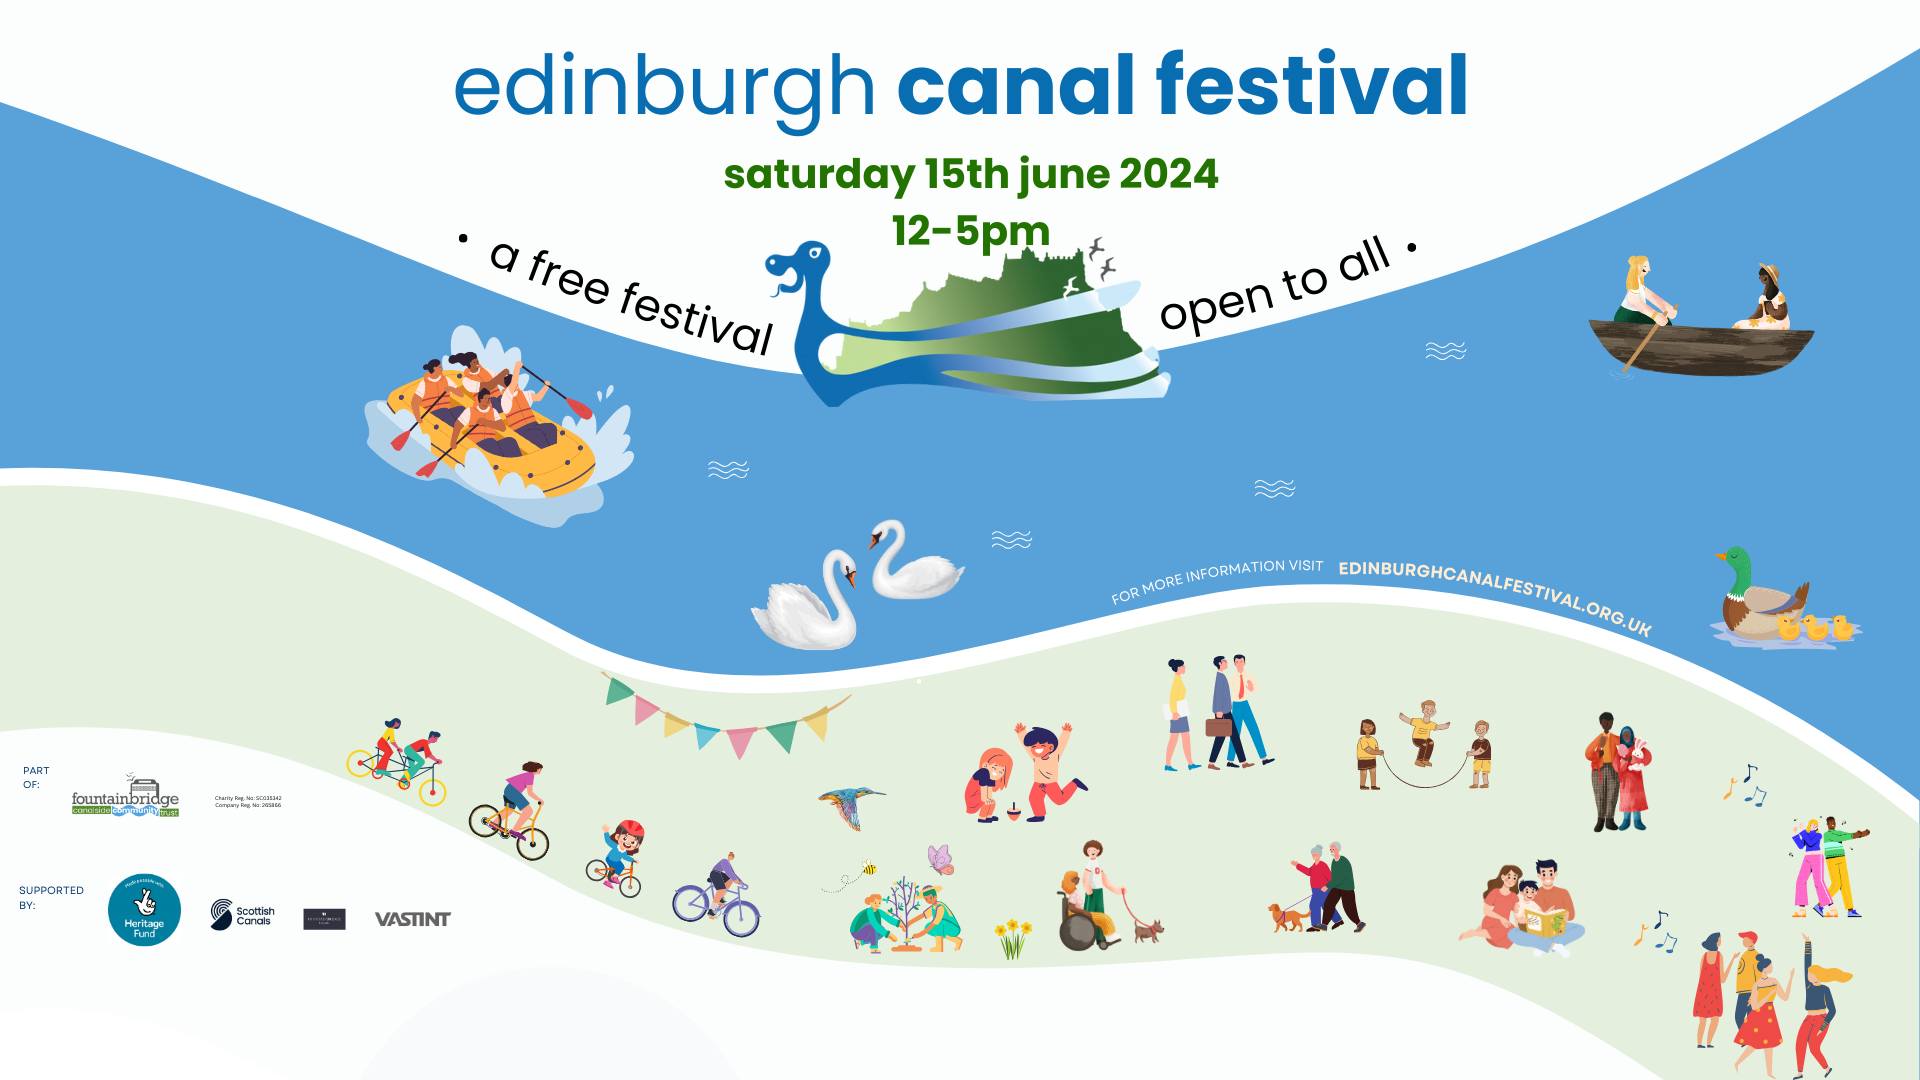 edinburgh canal festival 2024 poster